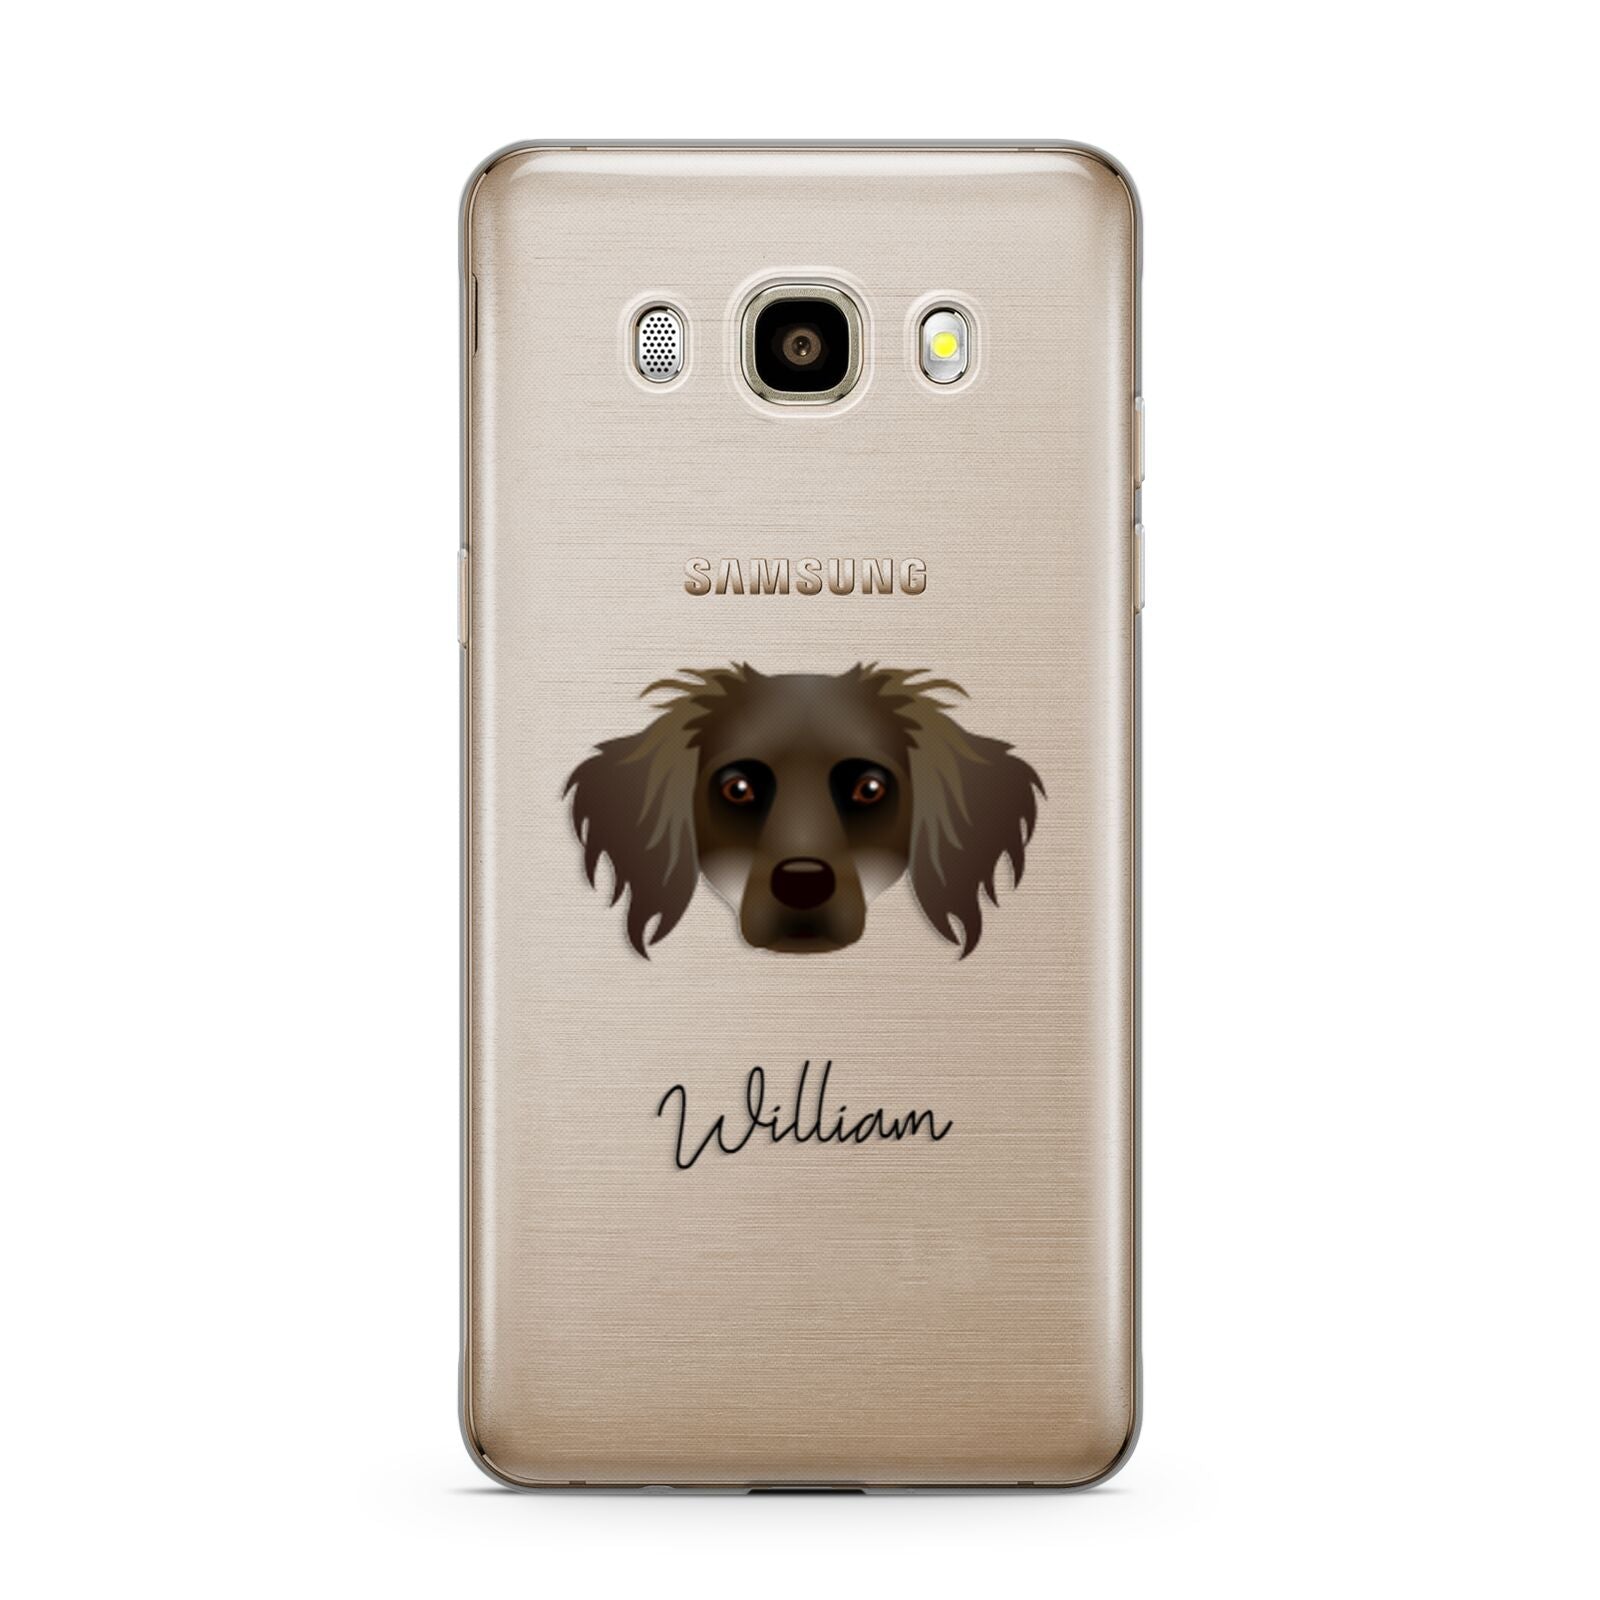 Dameranian Personalised Samsung Galaxy J7 2016 Case on gold phone